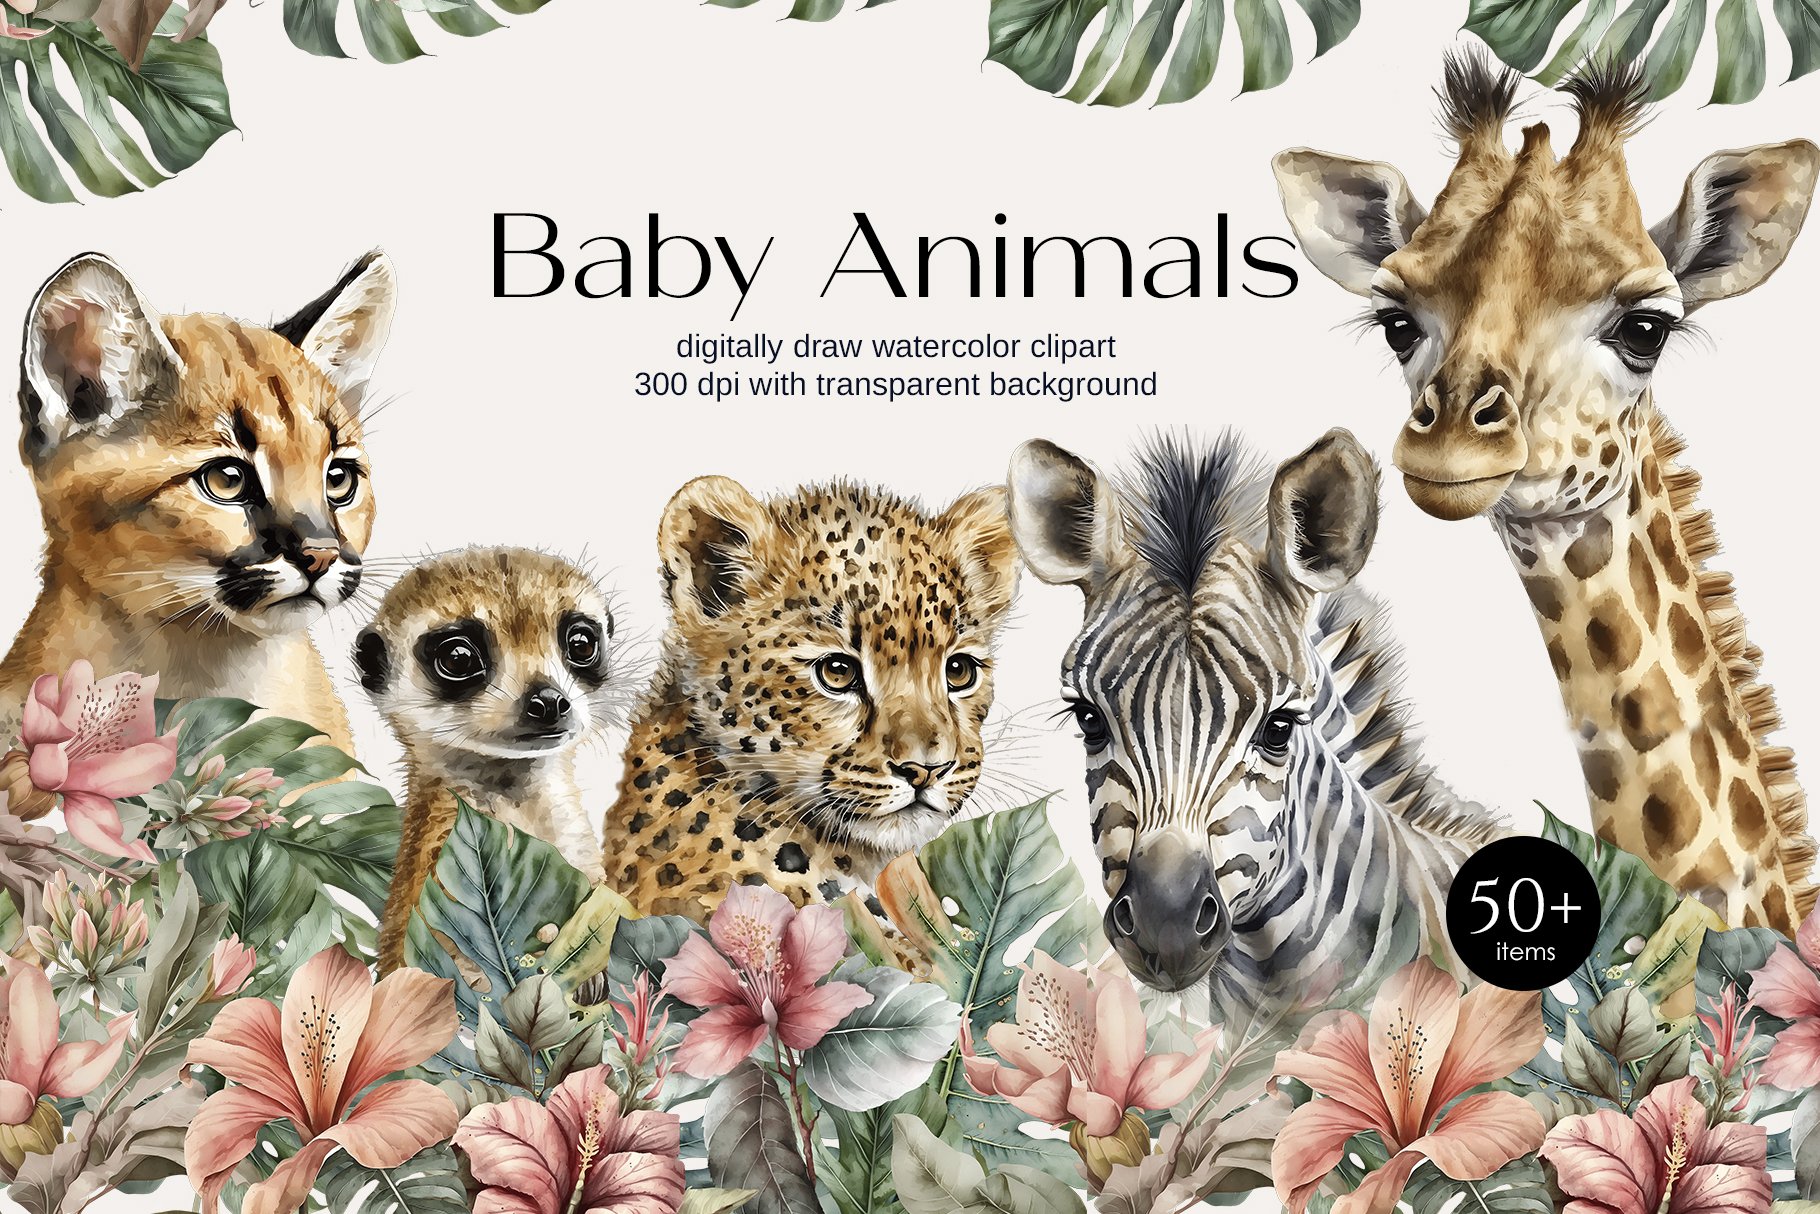 Watercolor Safari Baby Animals cover image.